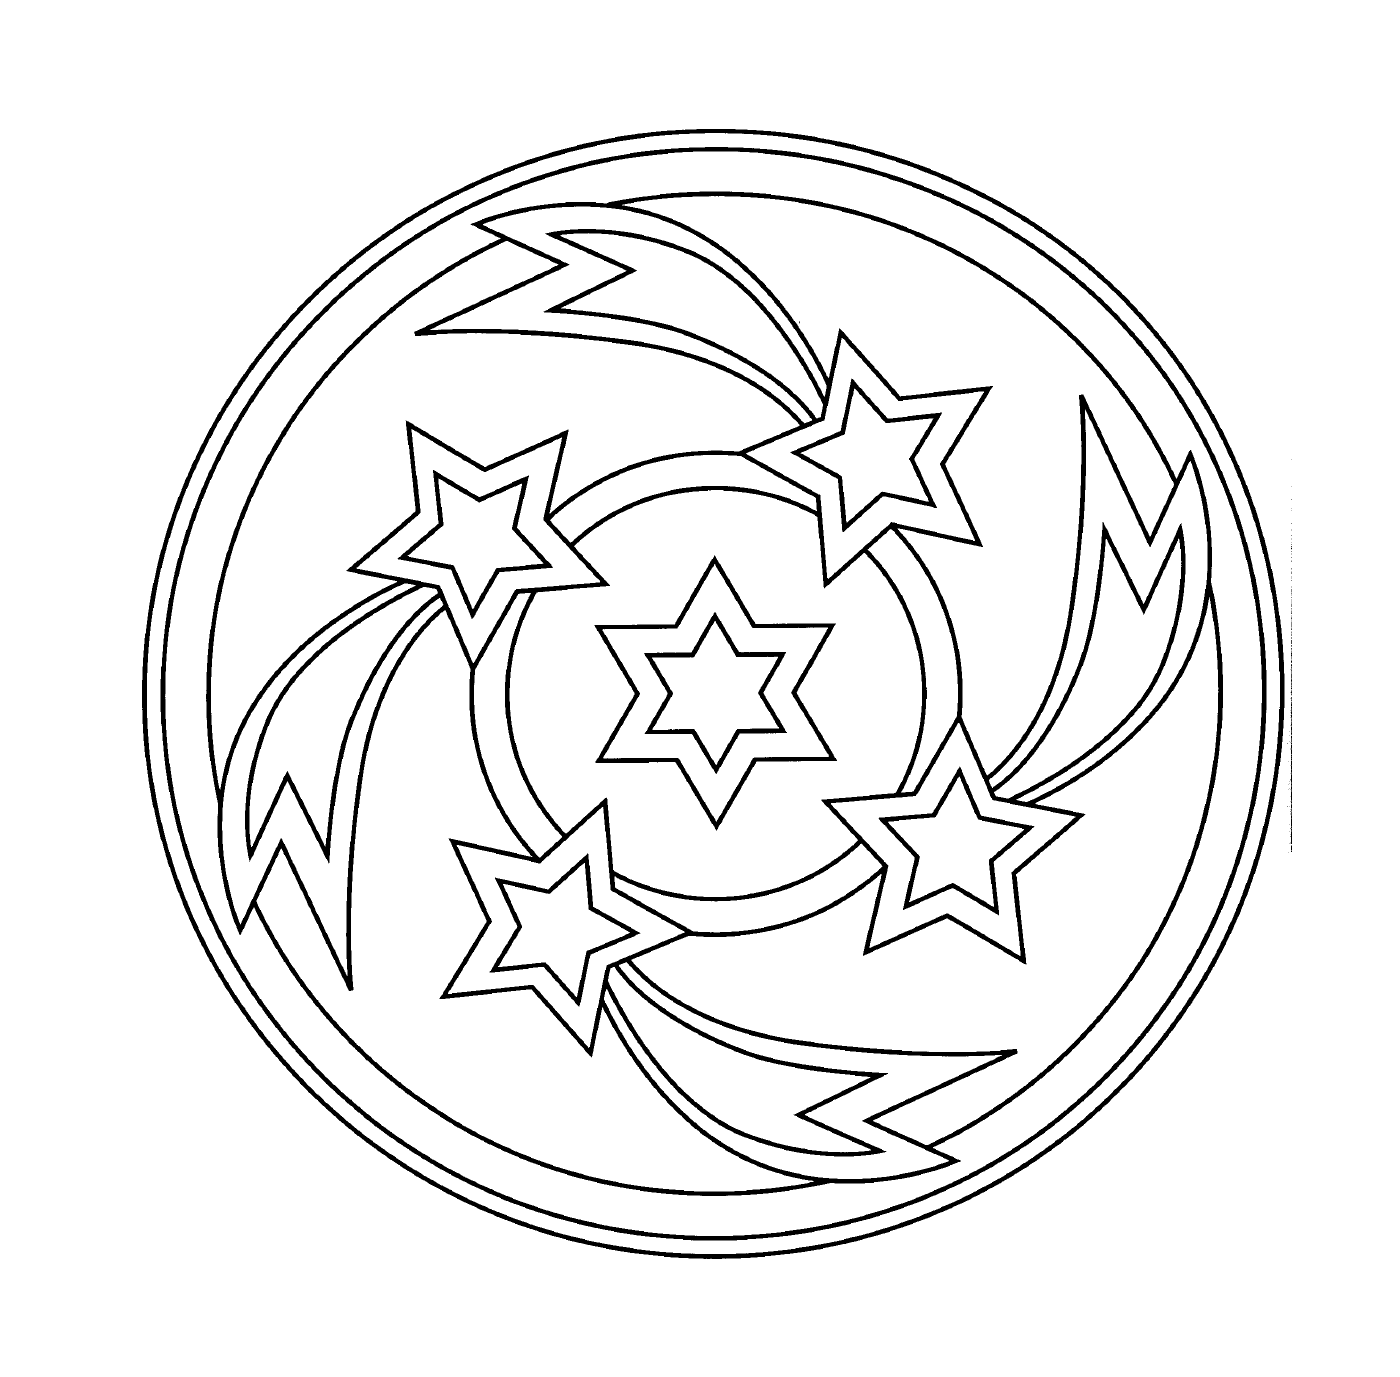  Estrella giratoria en un mandala 